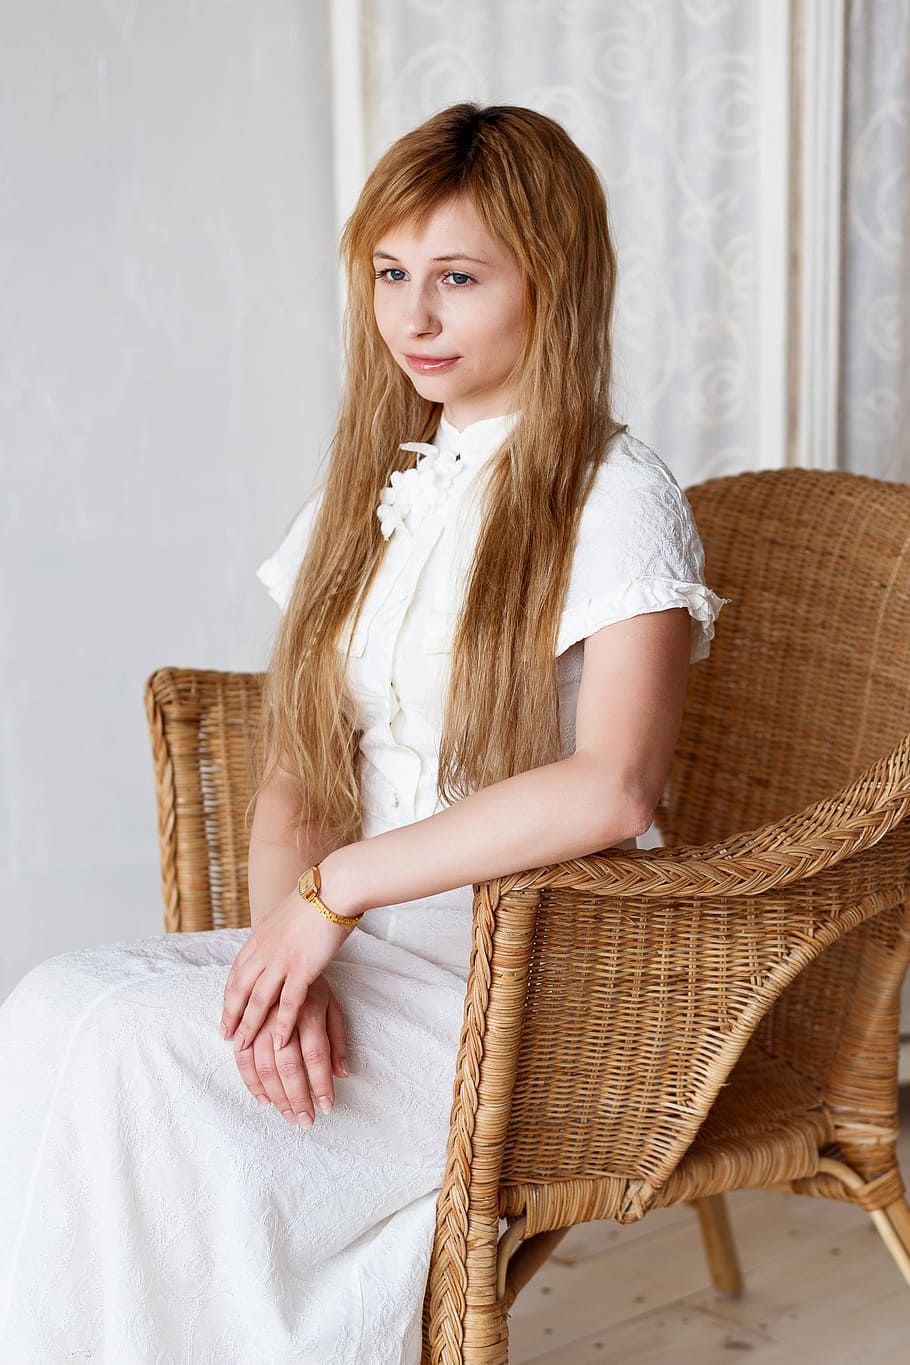 blonde woman wearing white dress sitting on brown wicker chair